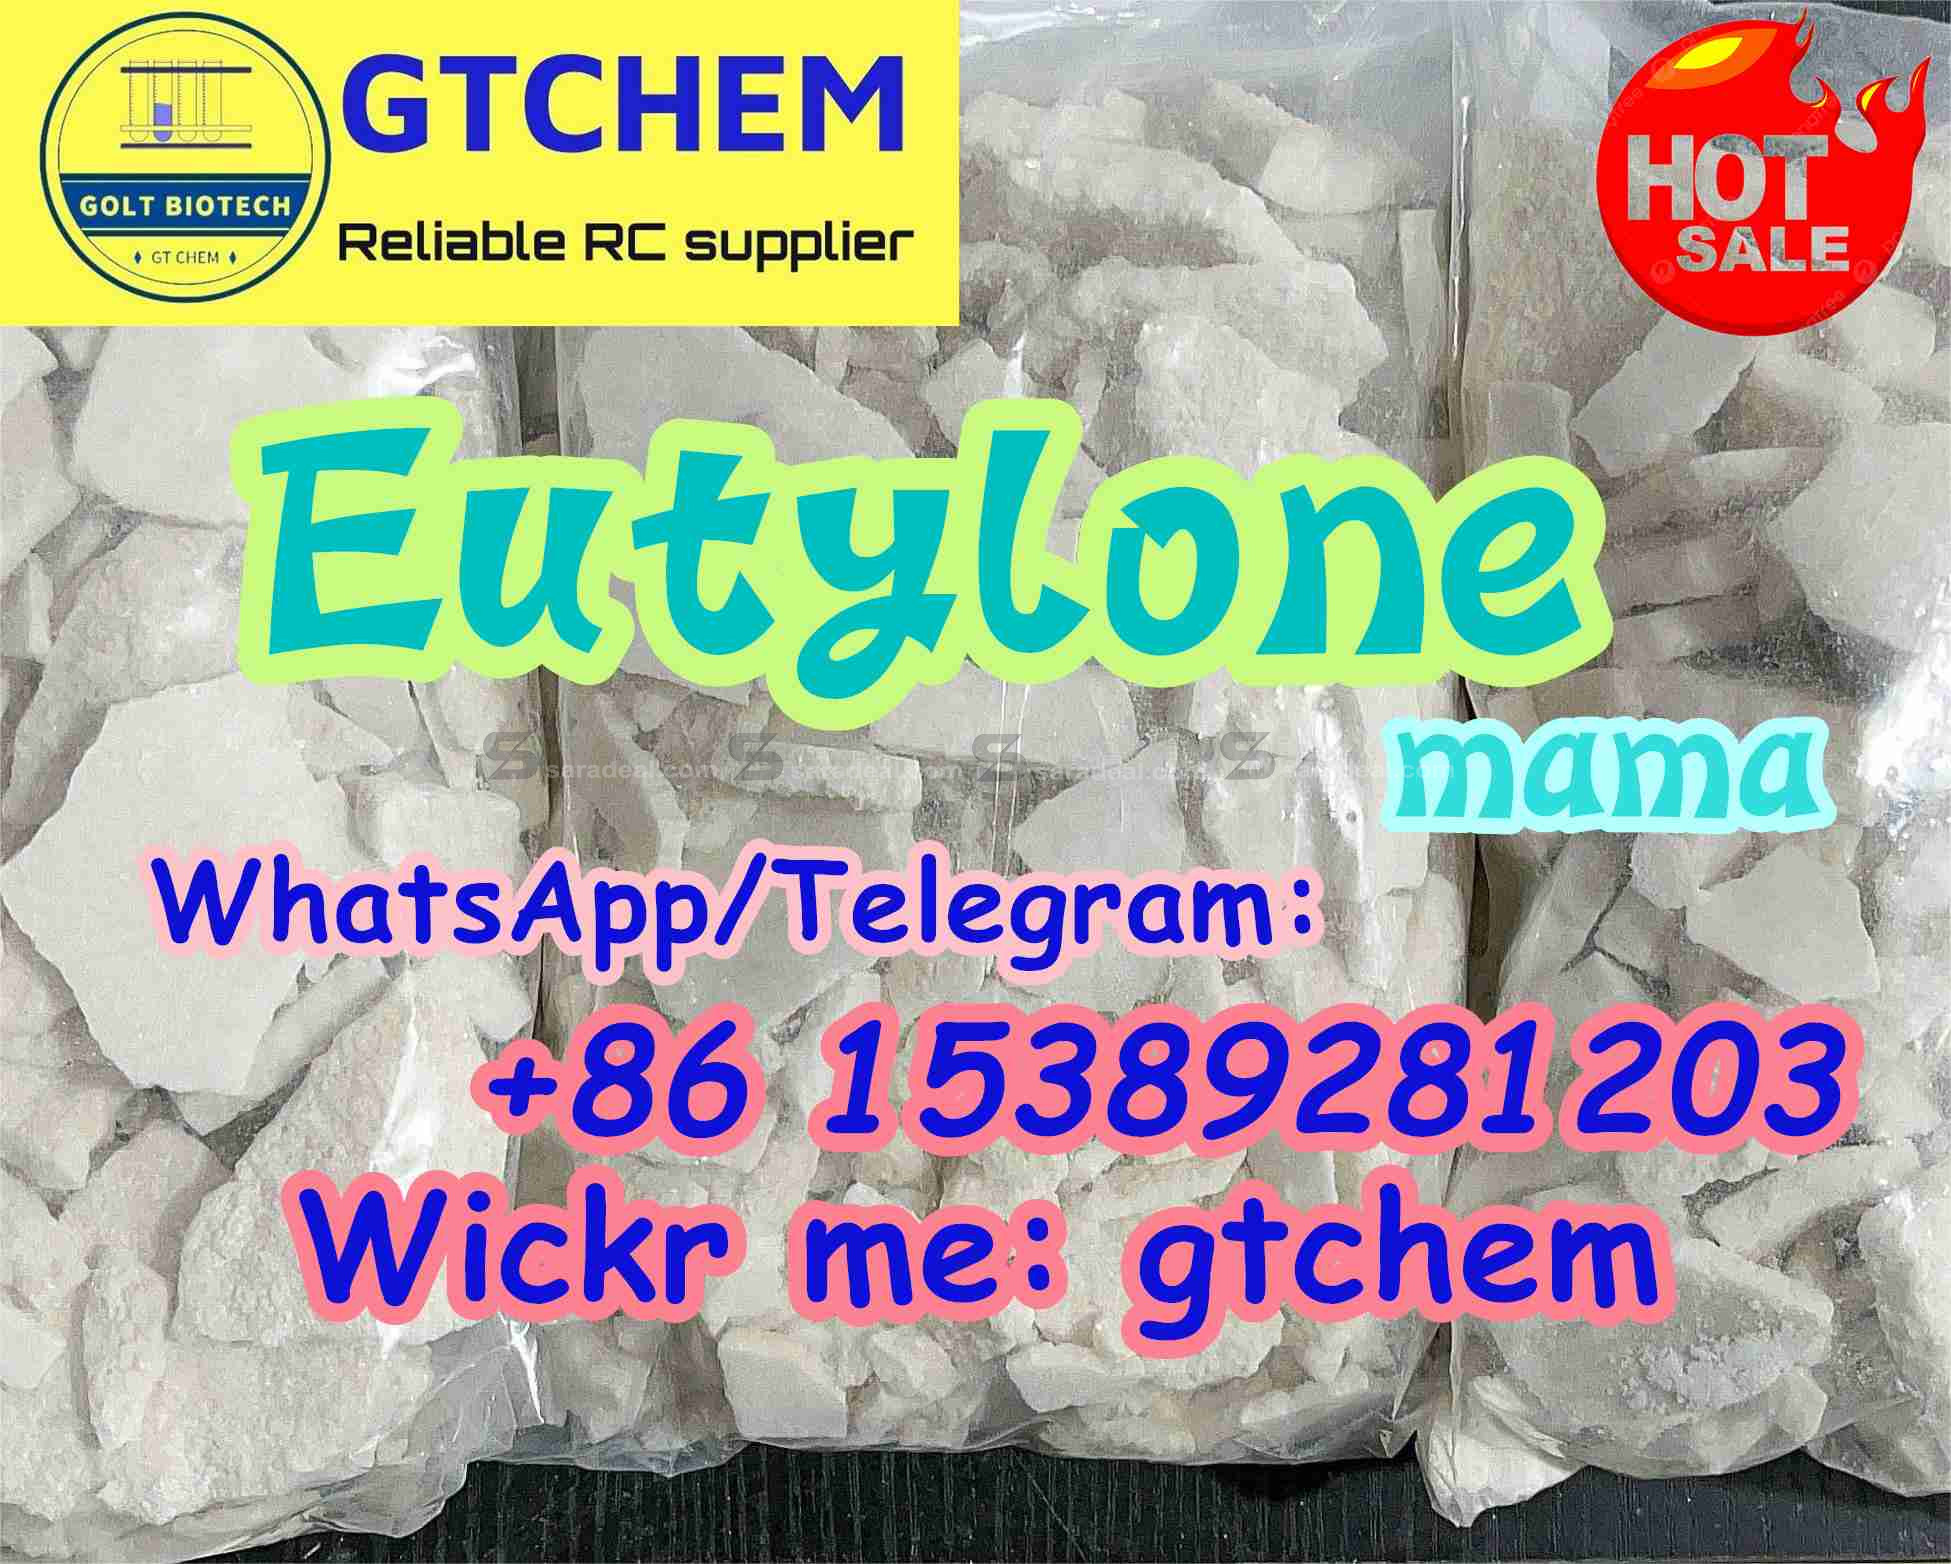 Potent eutylone EU euty eutylone crystal for sale